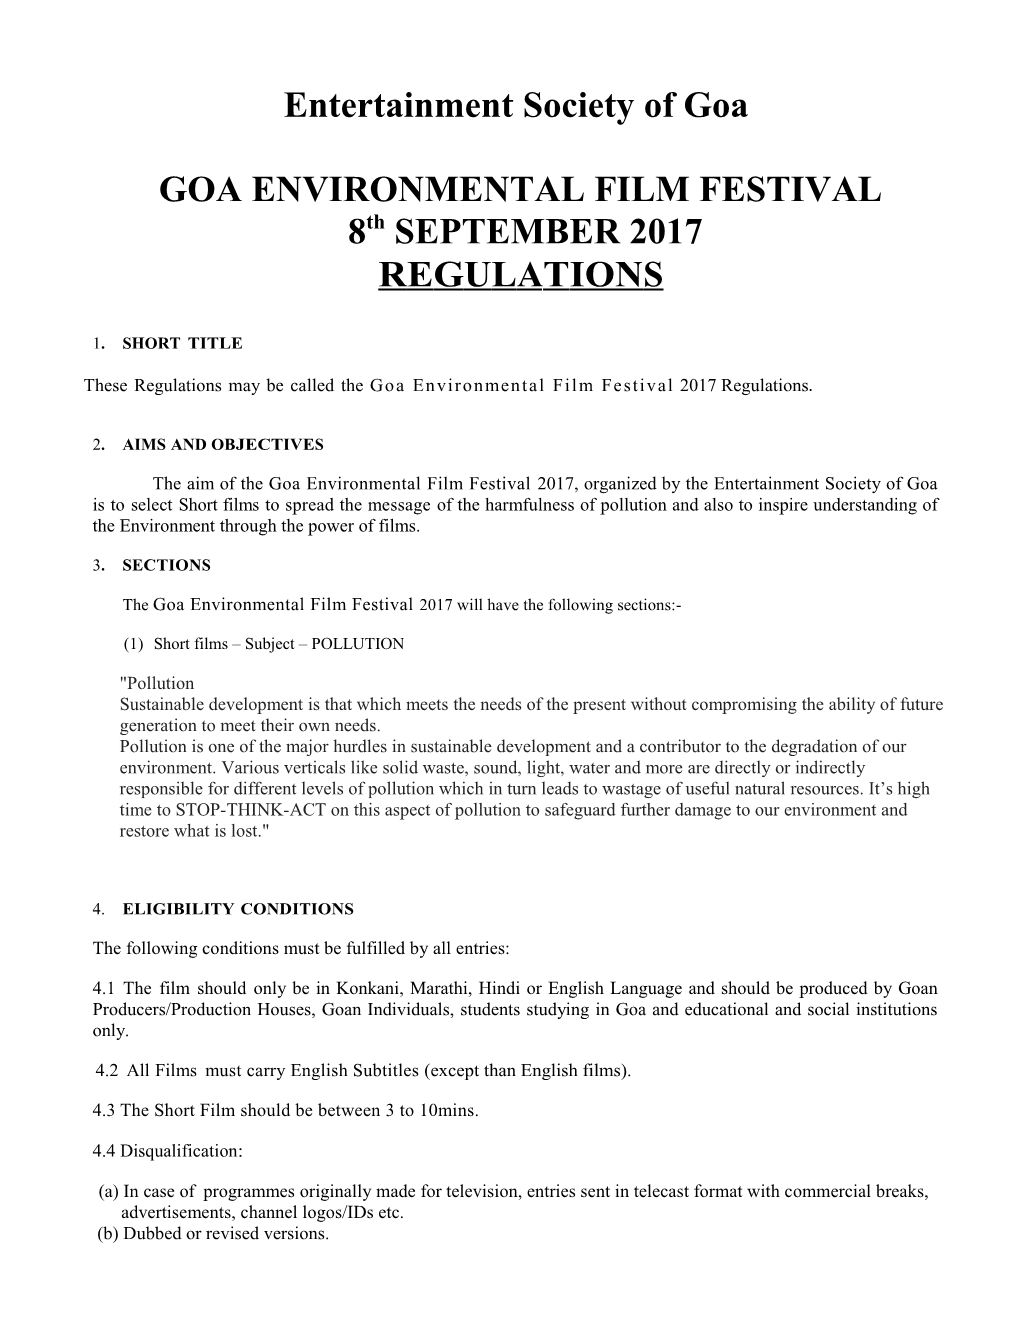 Goa Environmental Film Festival